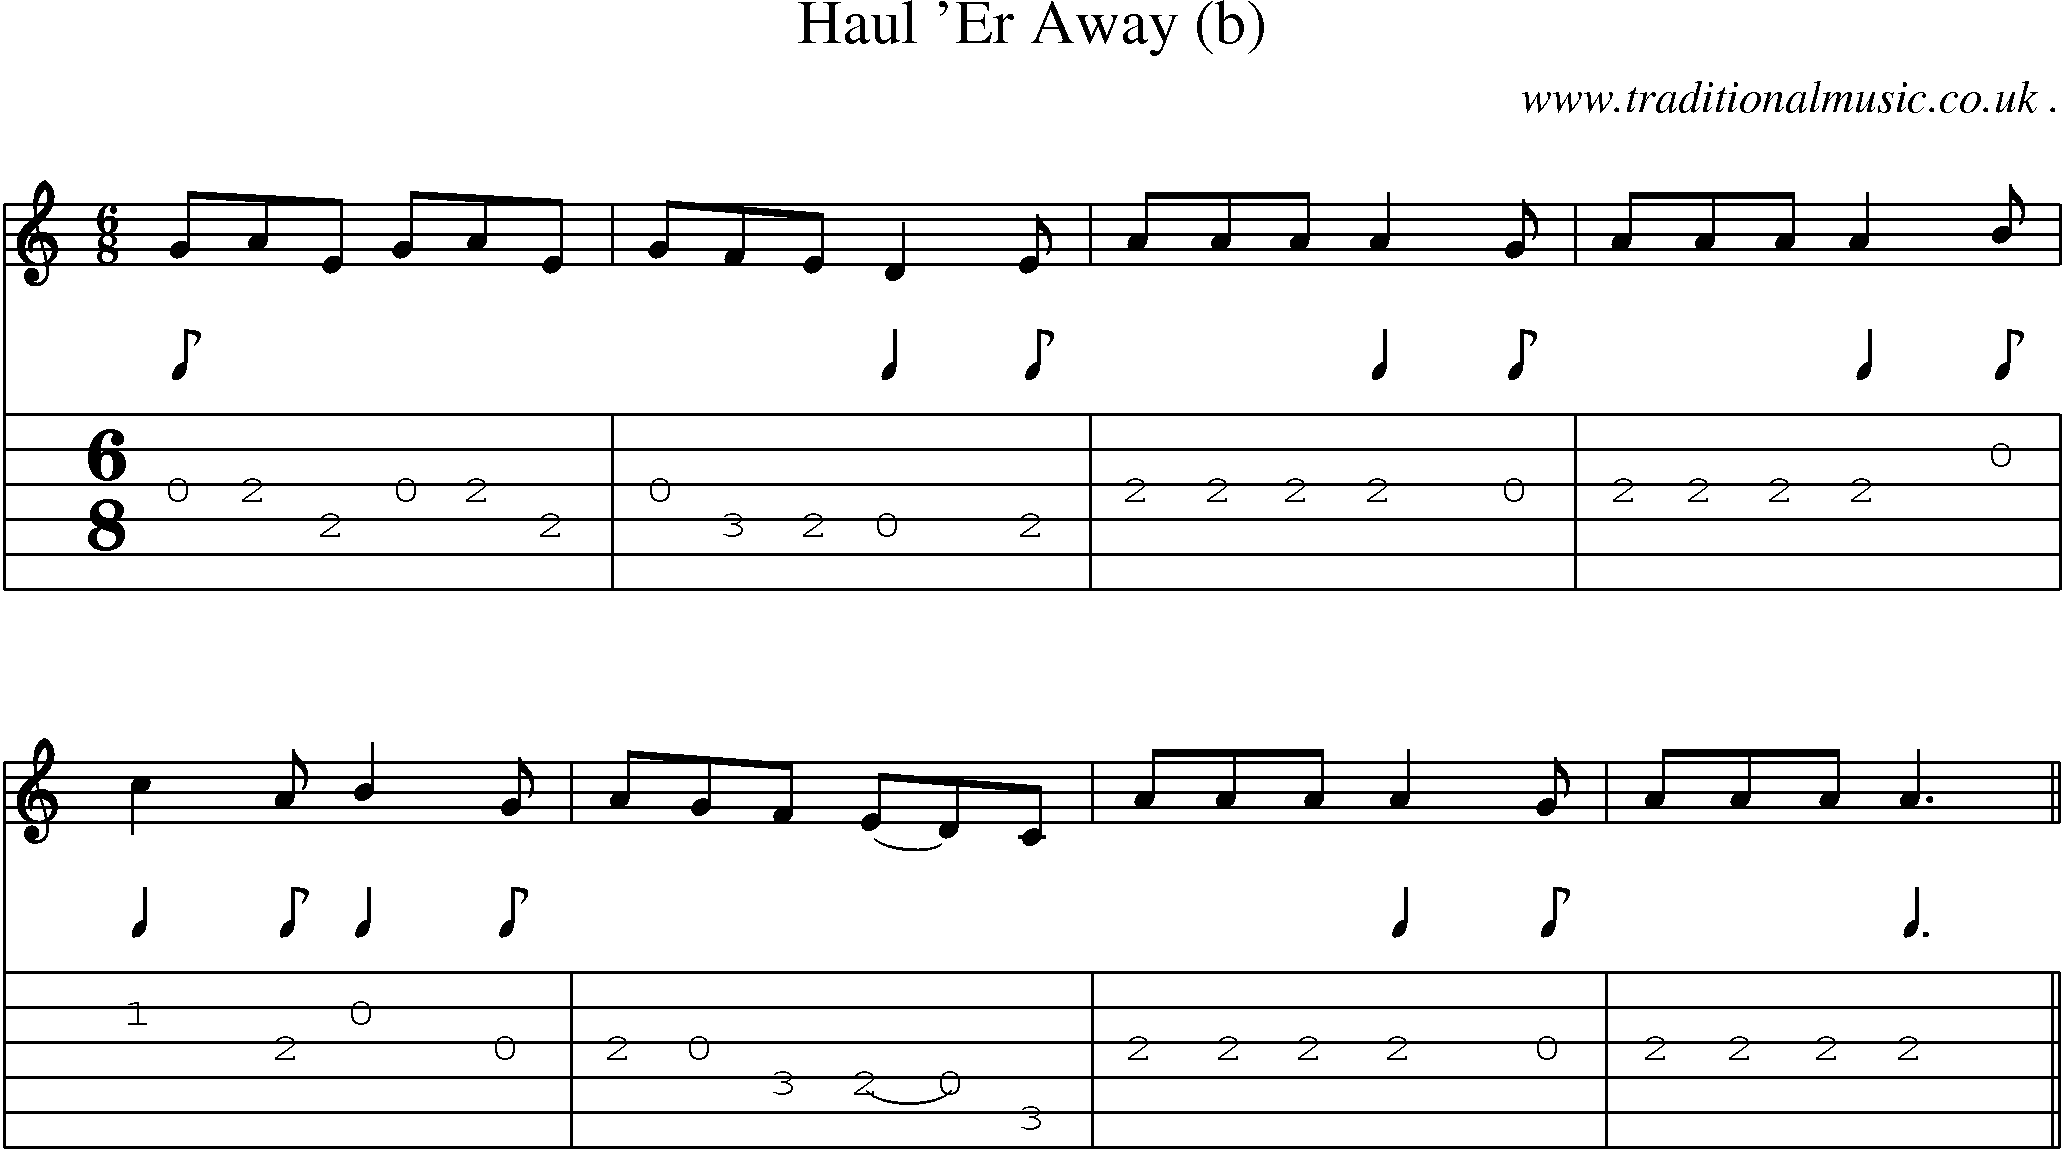 Sheet-Music and Guitar Tabs for Haul Er Away (b)